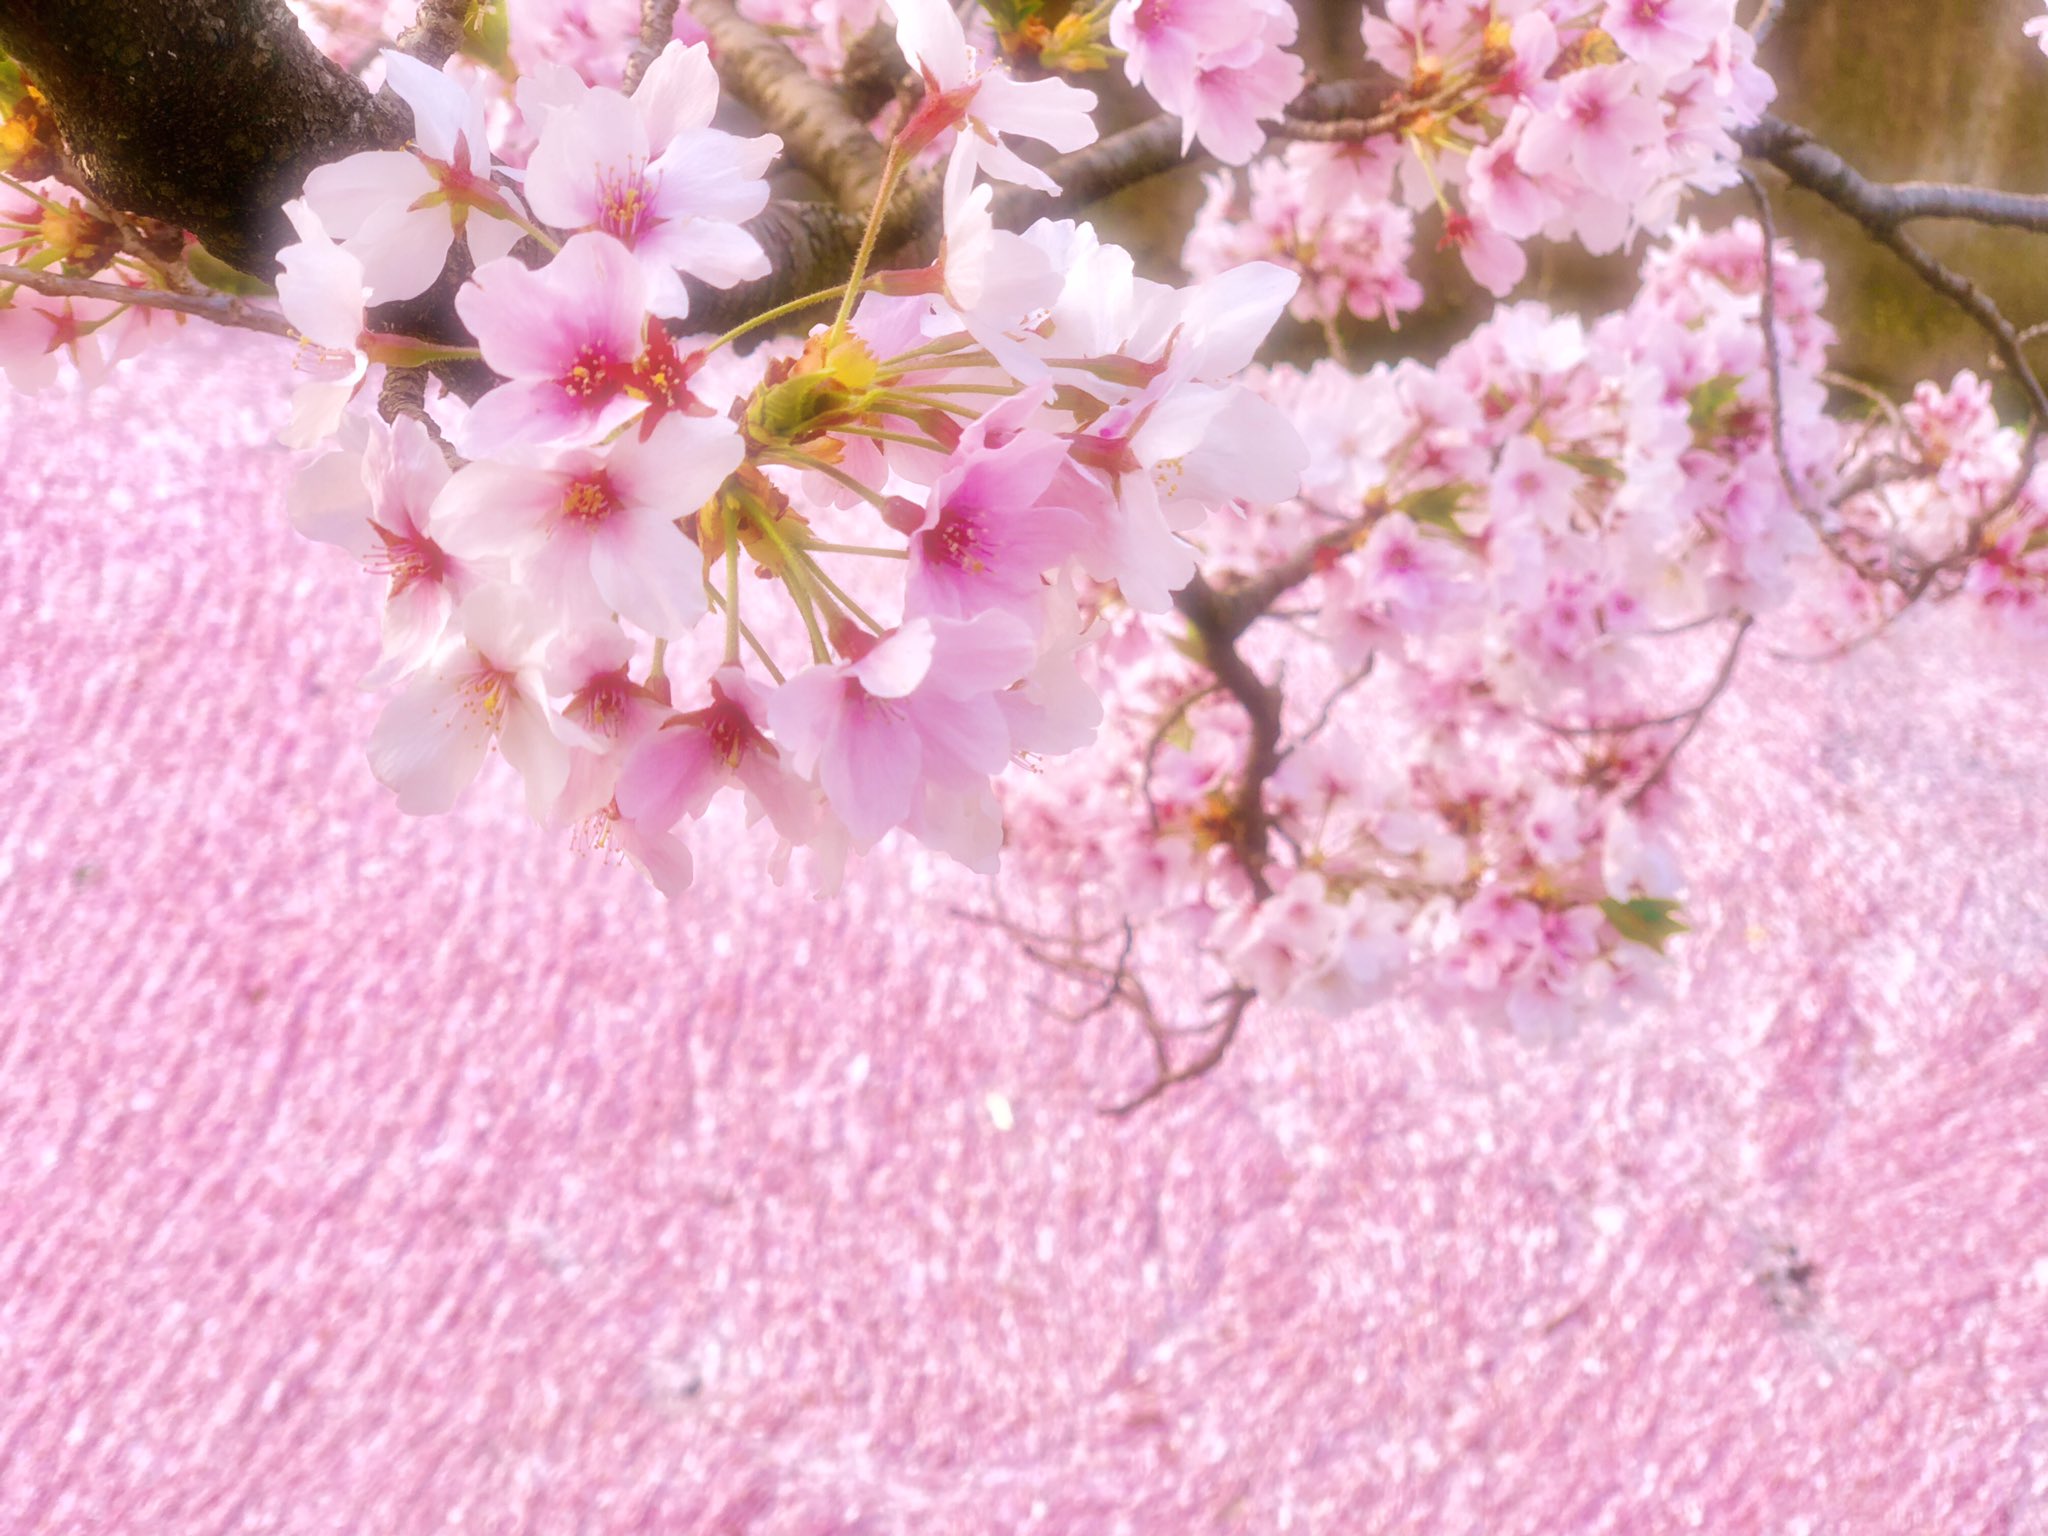 Waraku 京都 和楽 桜 花筏 桜の絨毯 朝散歩 哲学の道 タイミングよく桜の絨毯をみれました T Co 0grepblnh2 Twitter